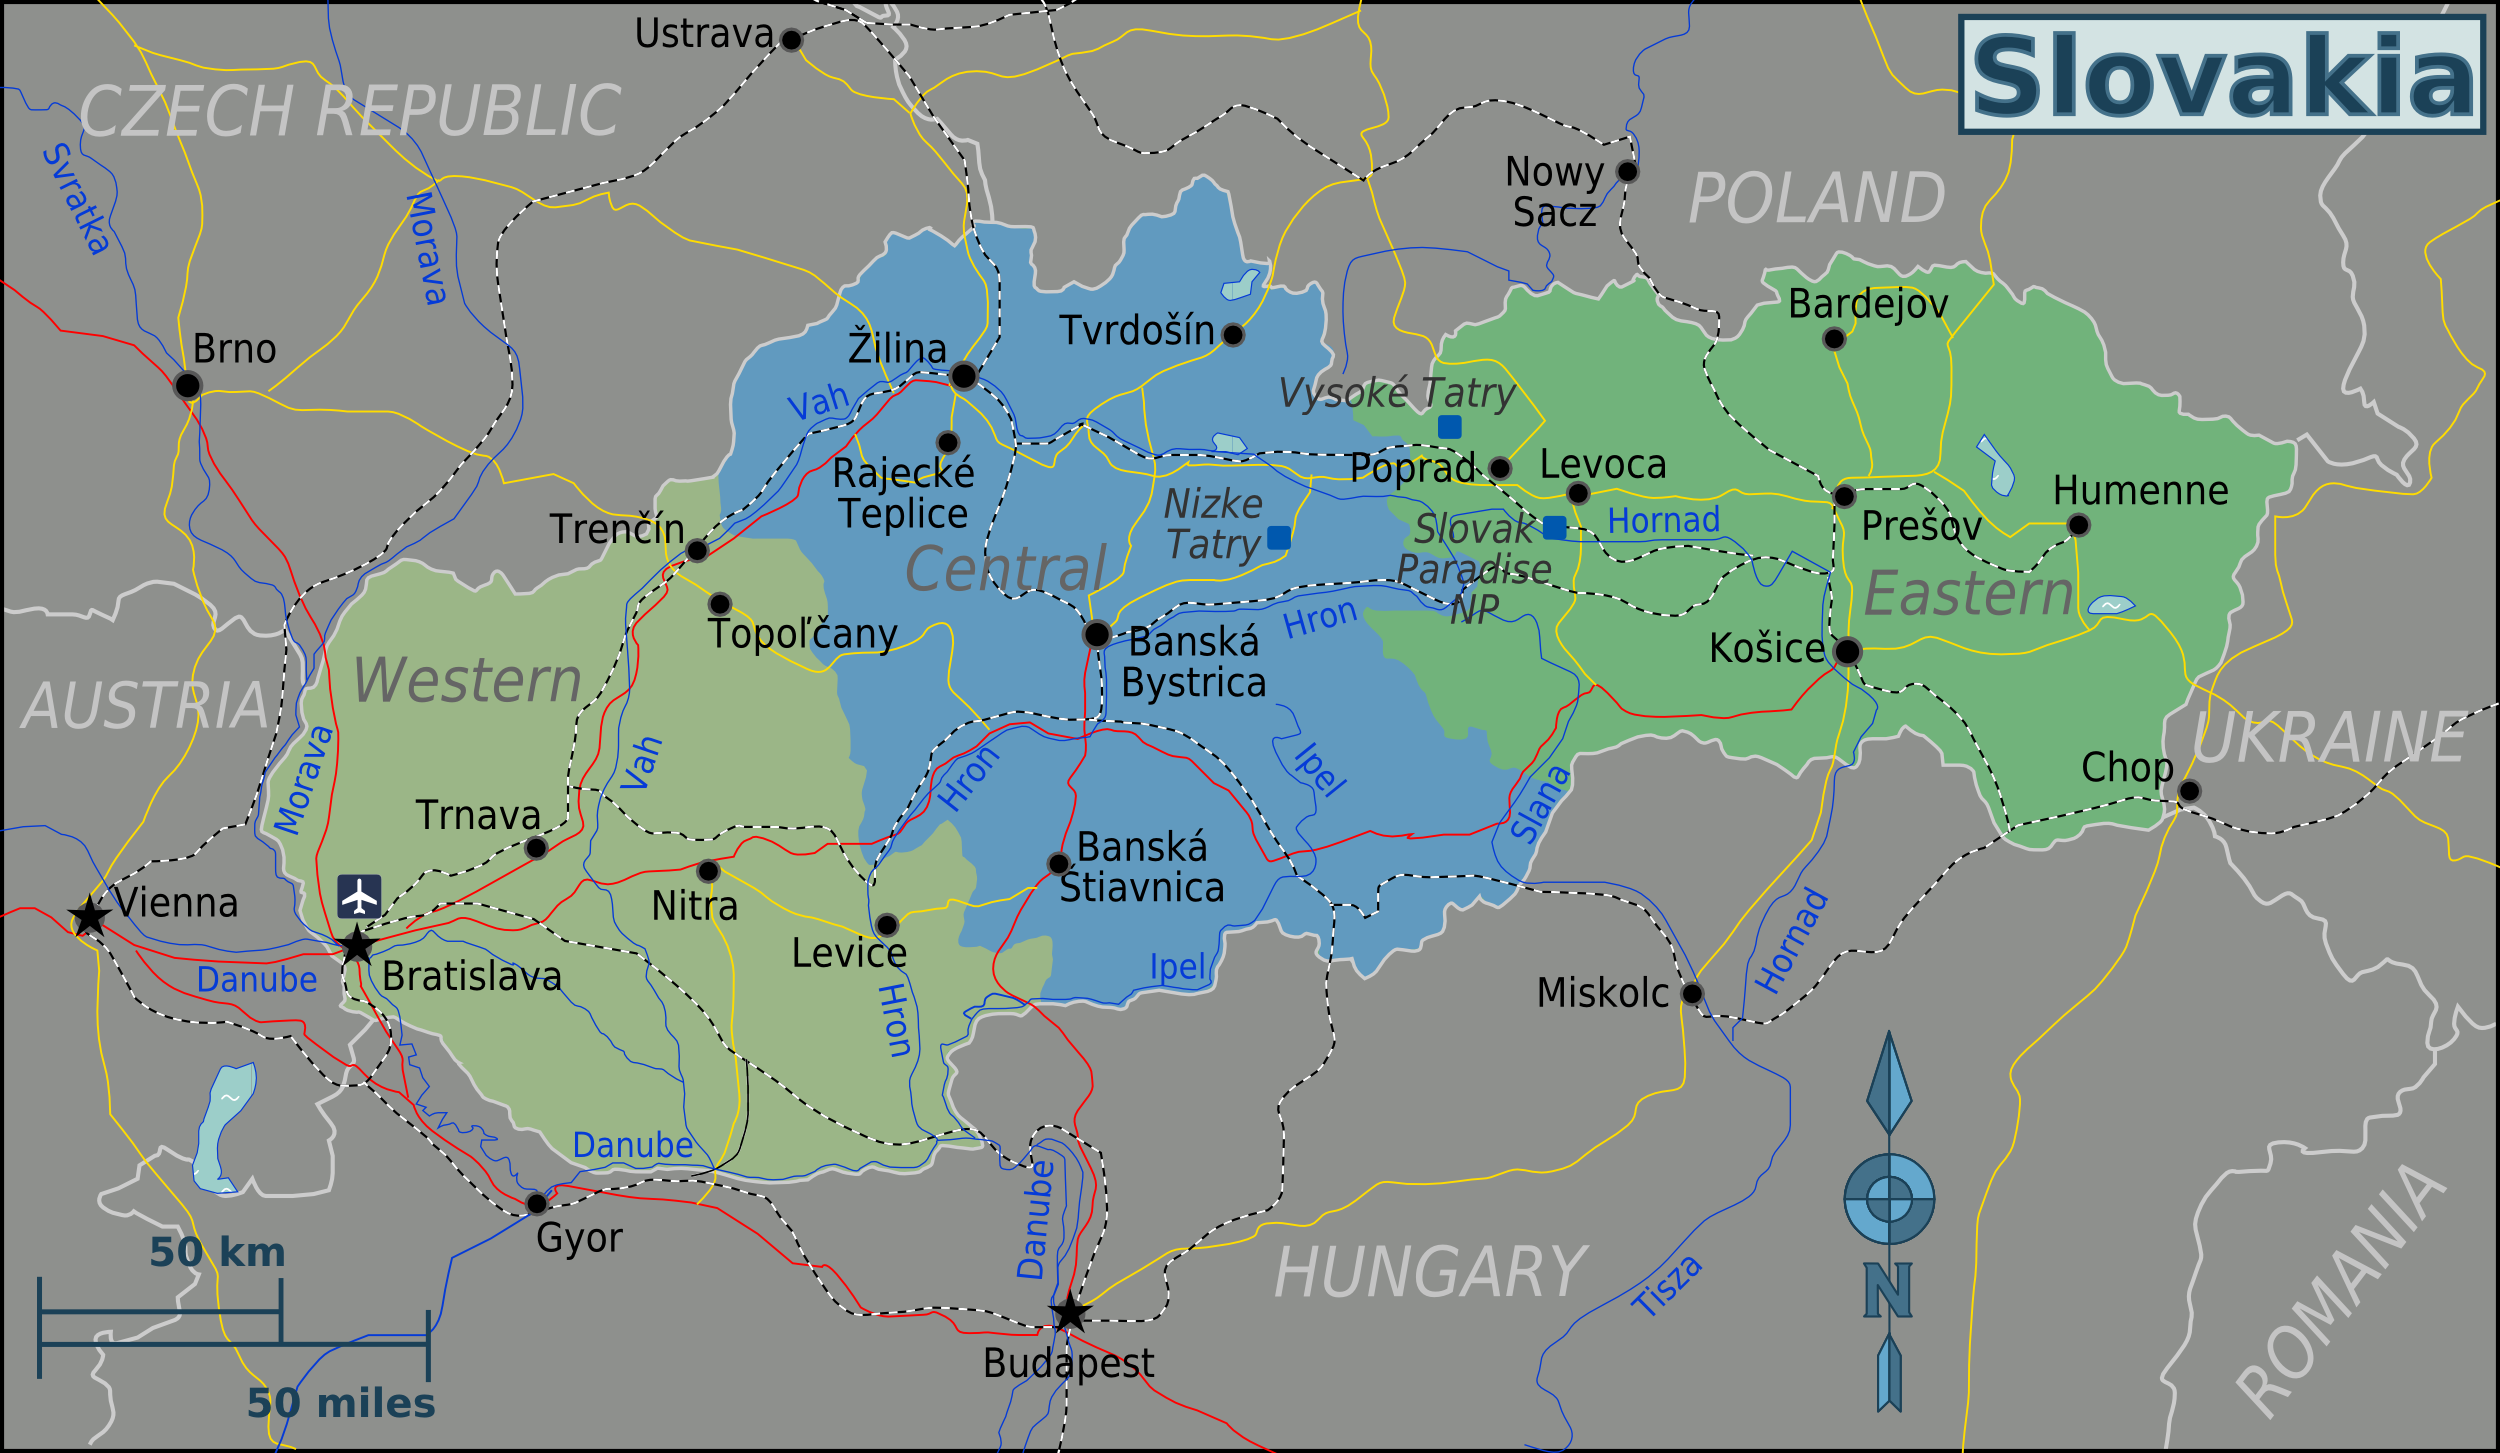 Landkarte Slowakei (Karte Regionen) : Weltkarte.com - Karten und